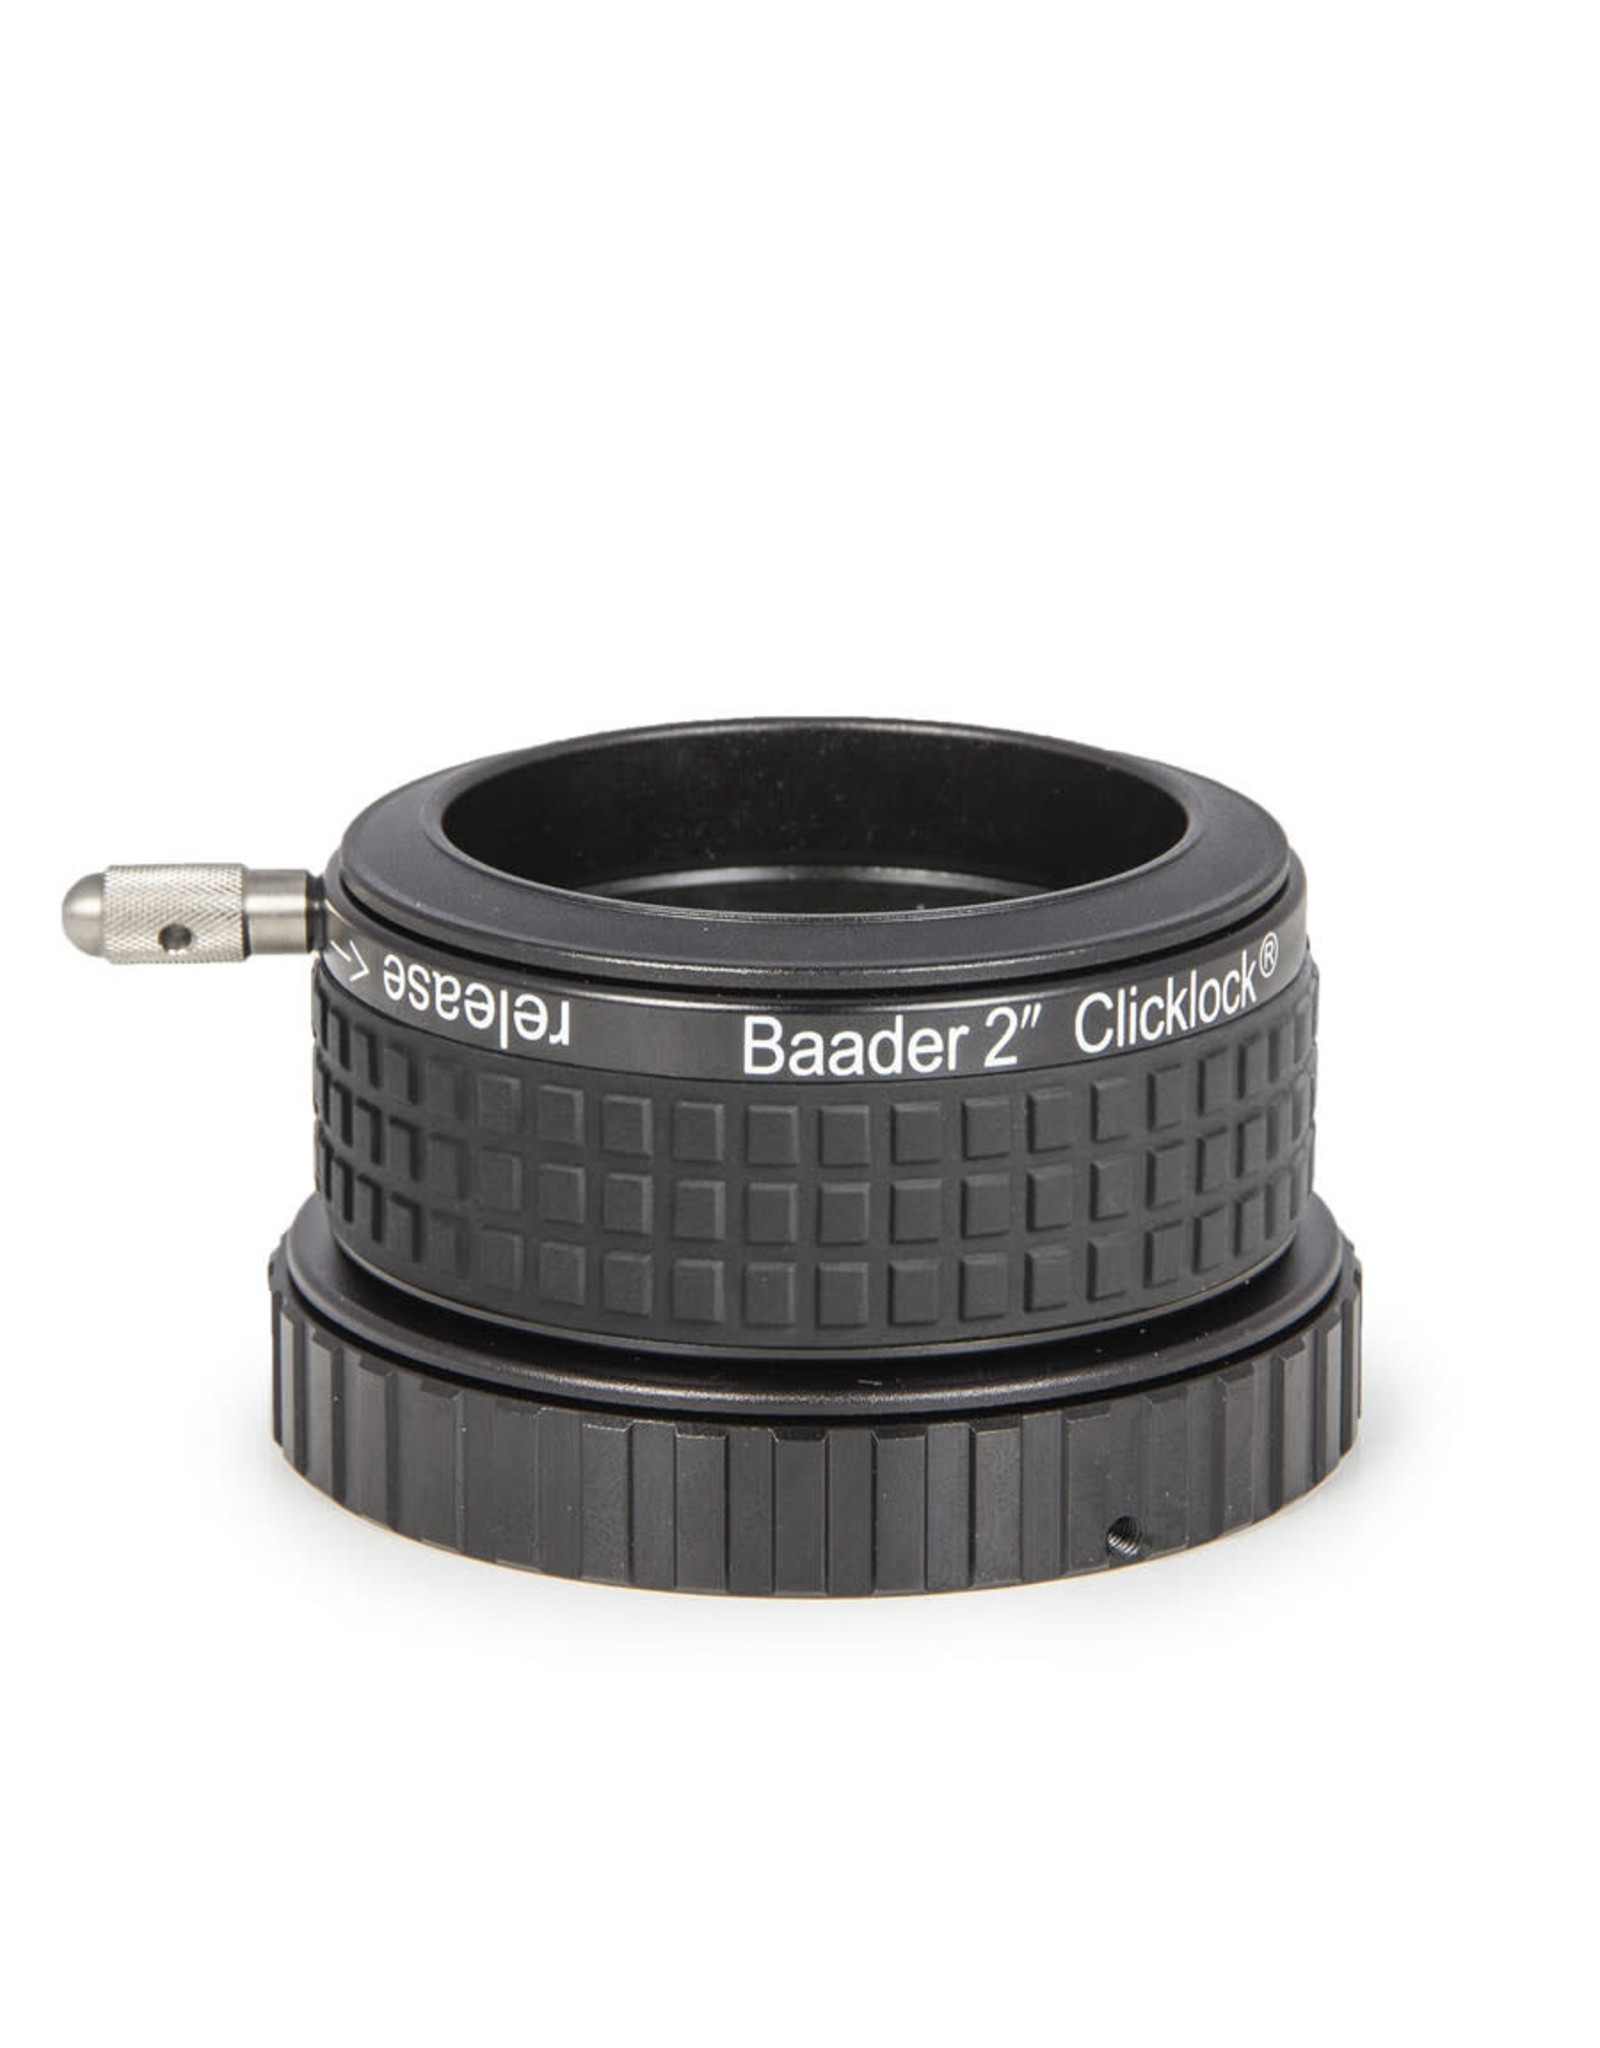 Baader Planetarium Baader 2" Clicklock Clamp for Hexafoc Style Focusers - M68i Thread